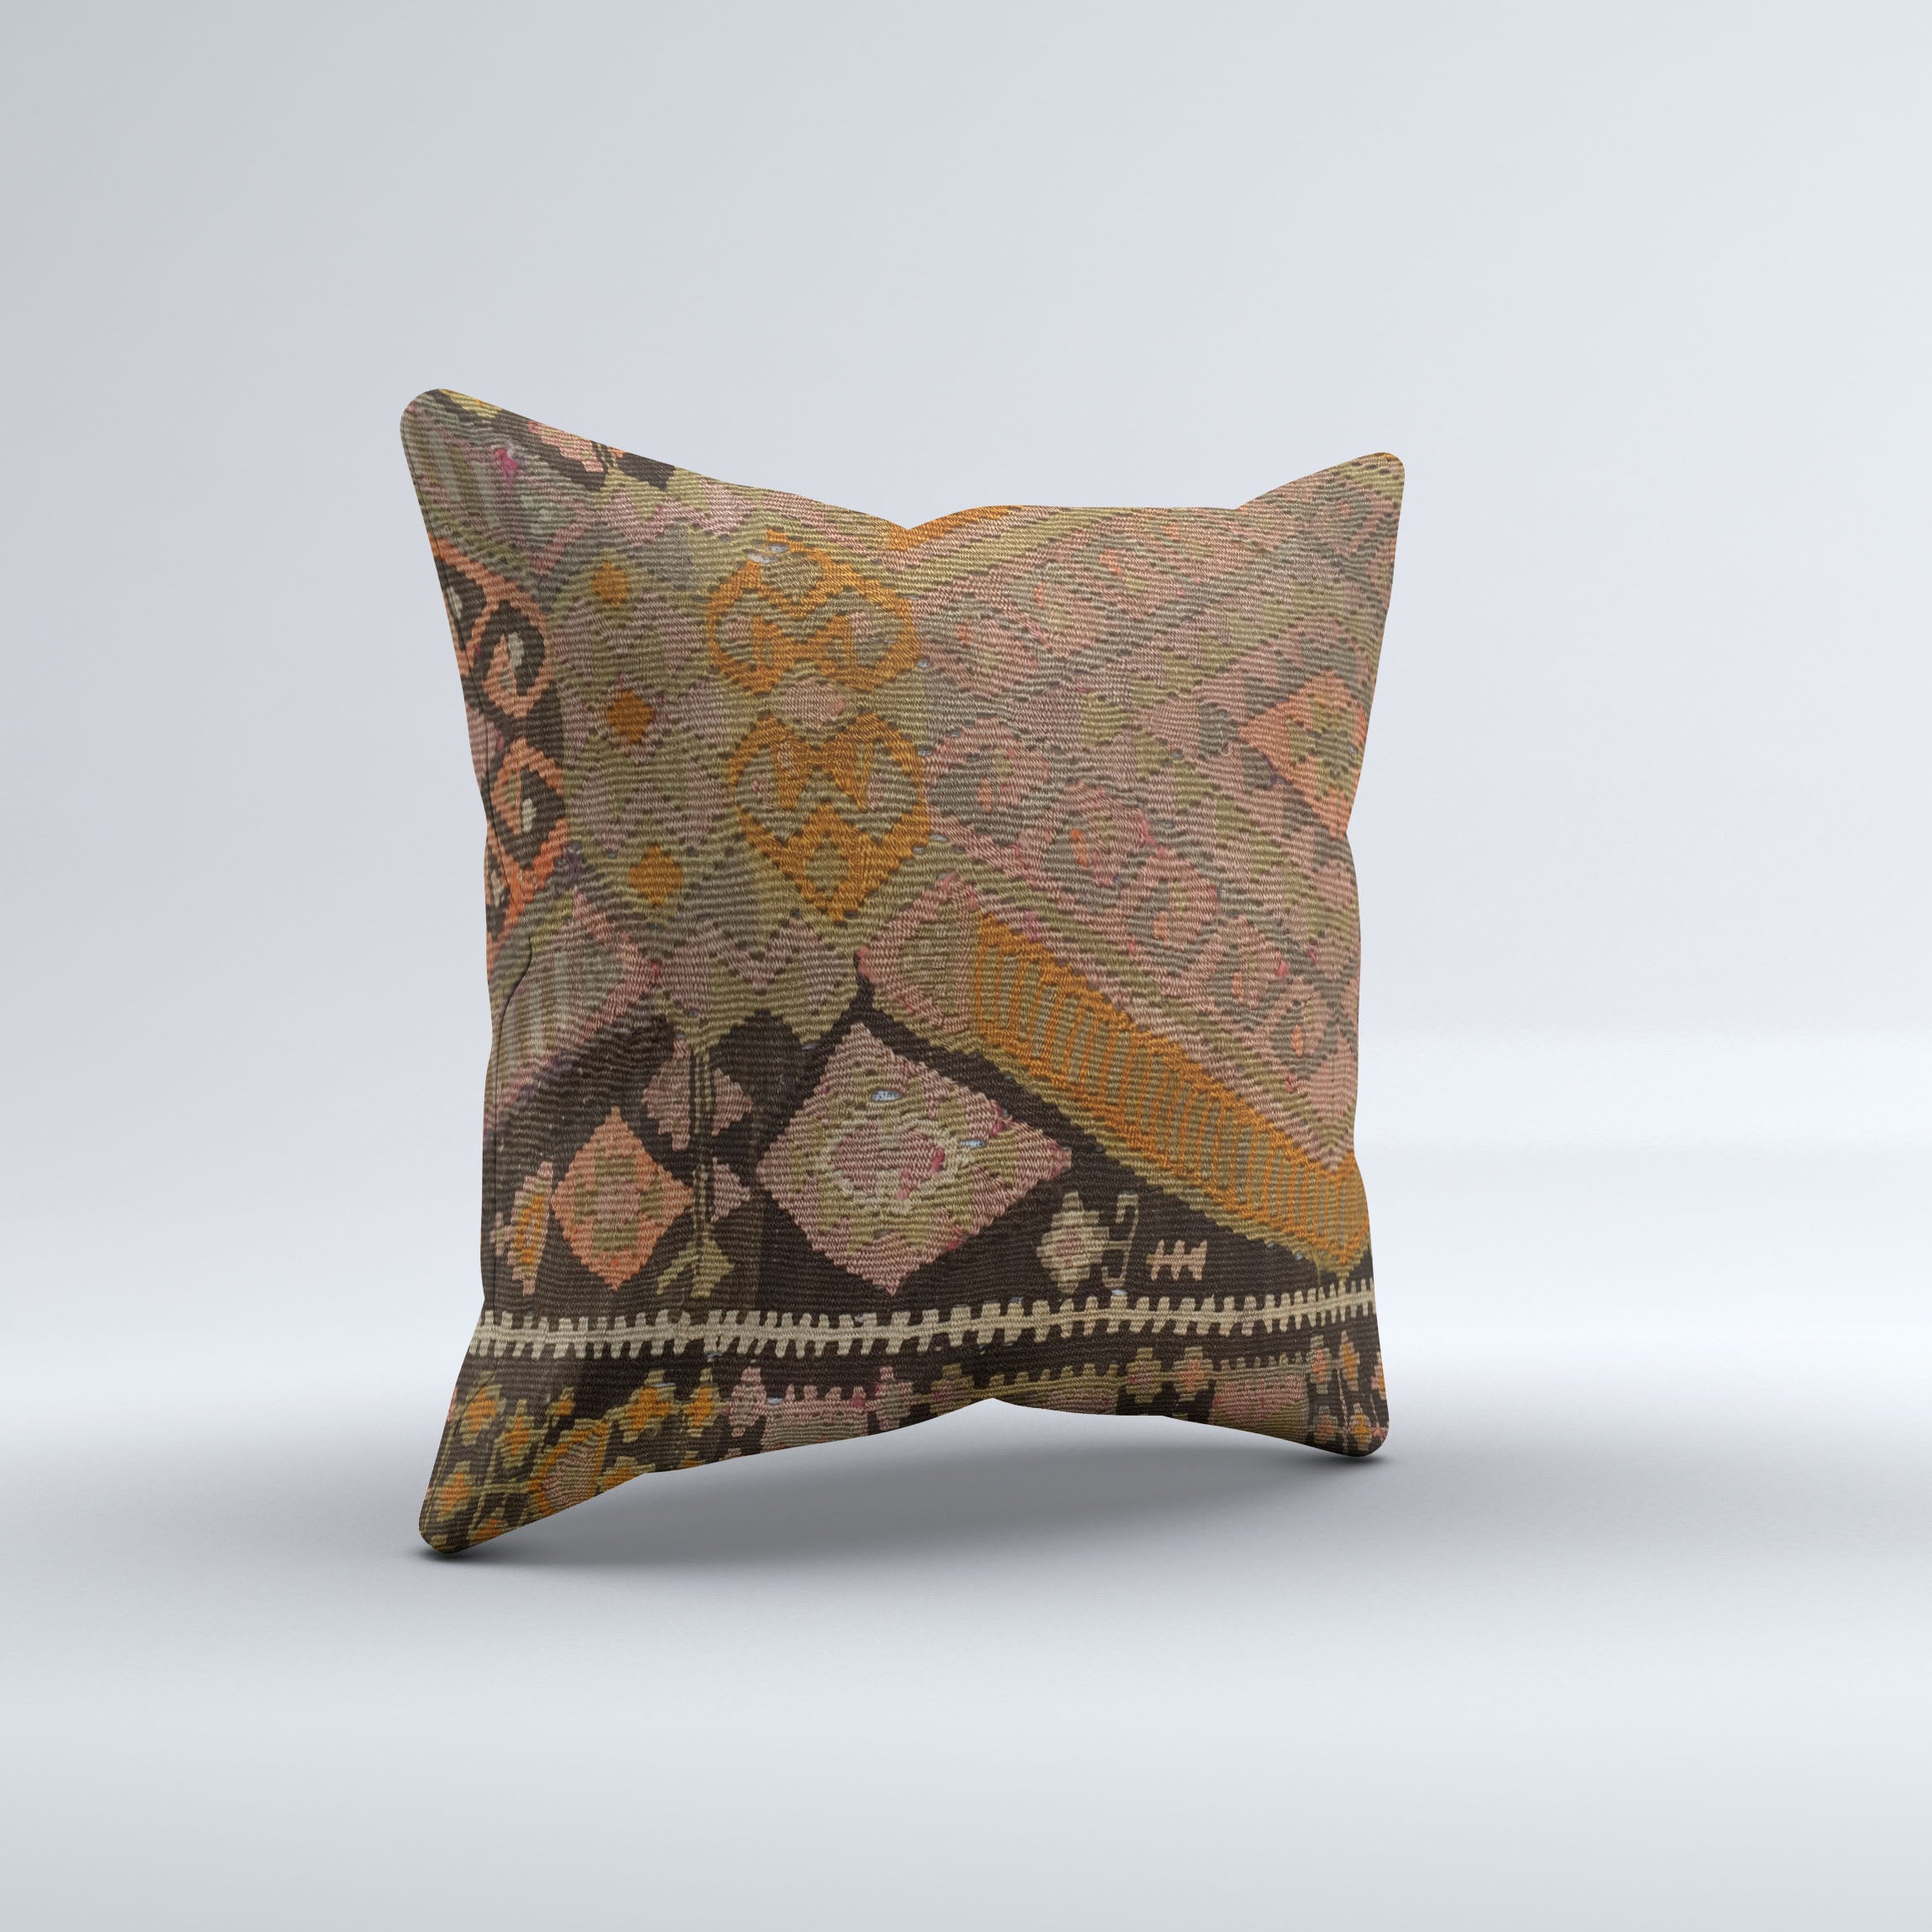 Vintage Turkish Kilim Cushion Cover 60x60 cm Square Wool Large Pillowcase 66489